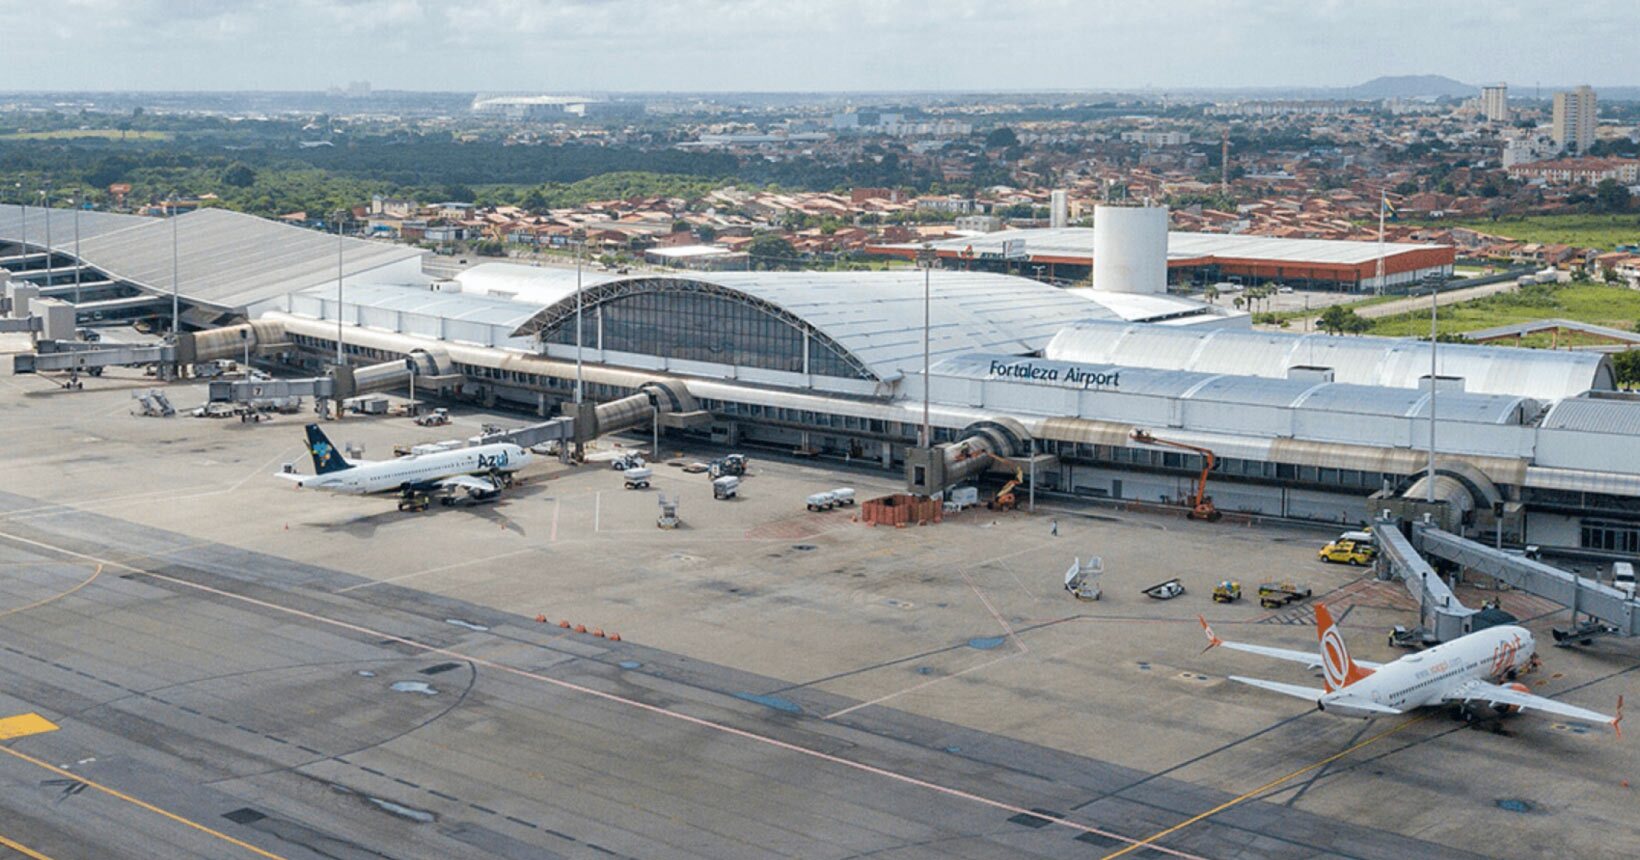 Aeroporto de Fortaleza (FOR) - guia completo para viajantes!